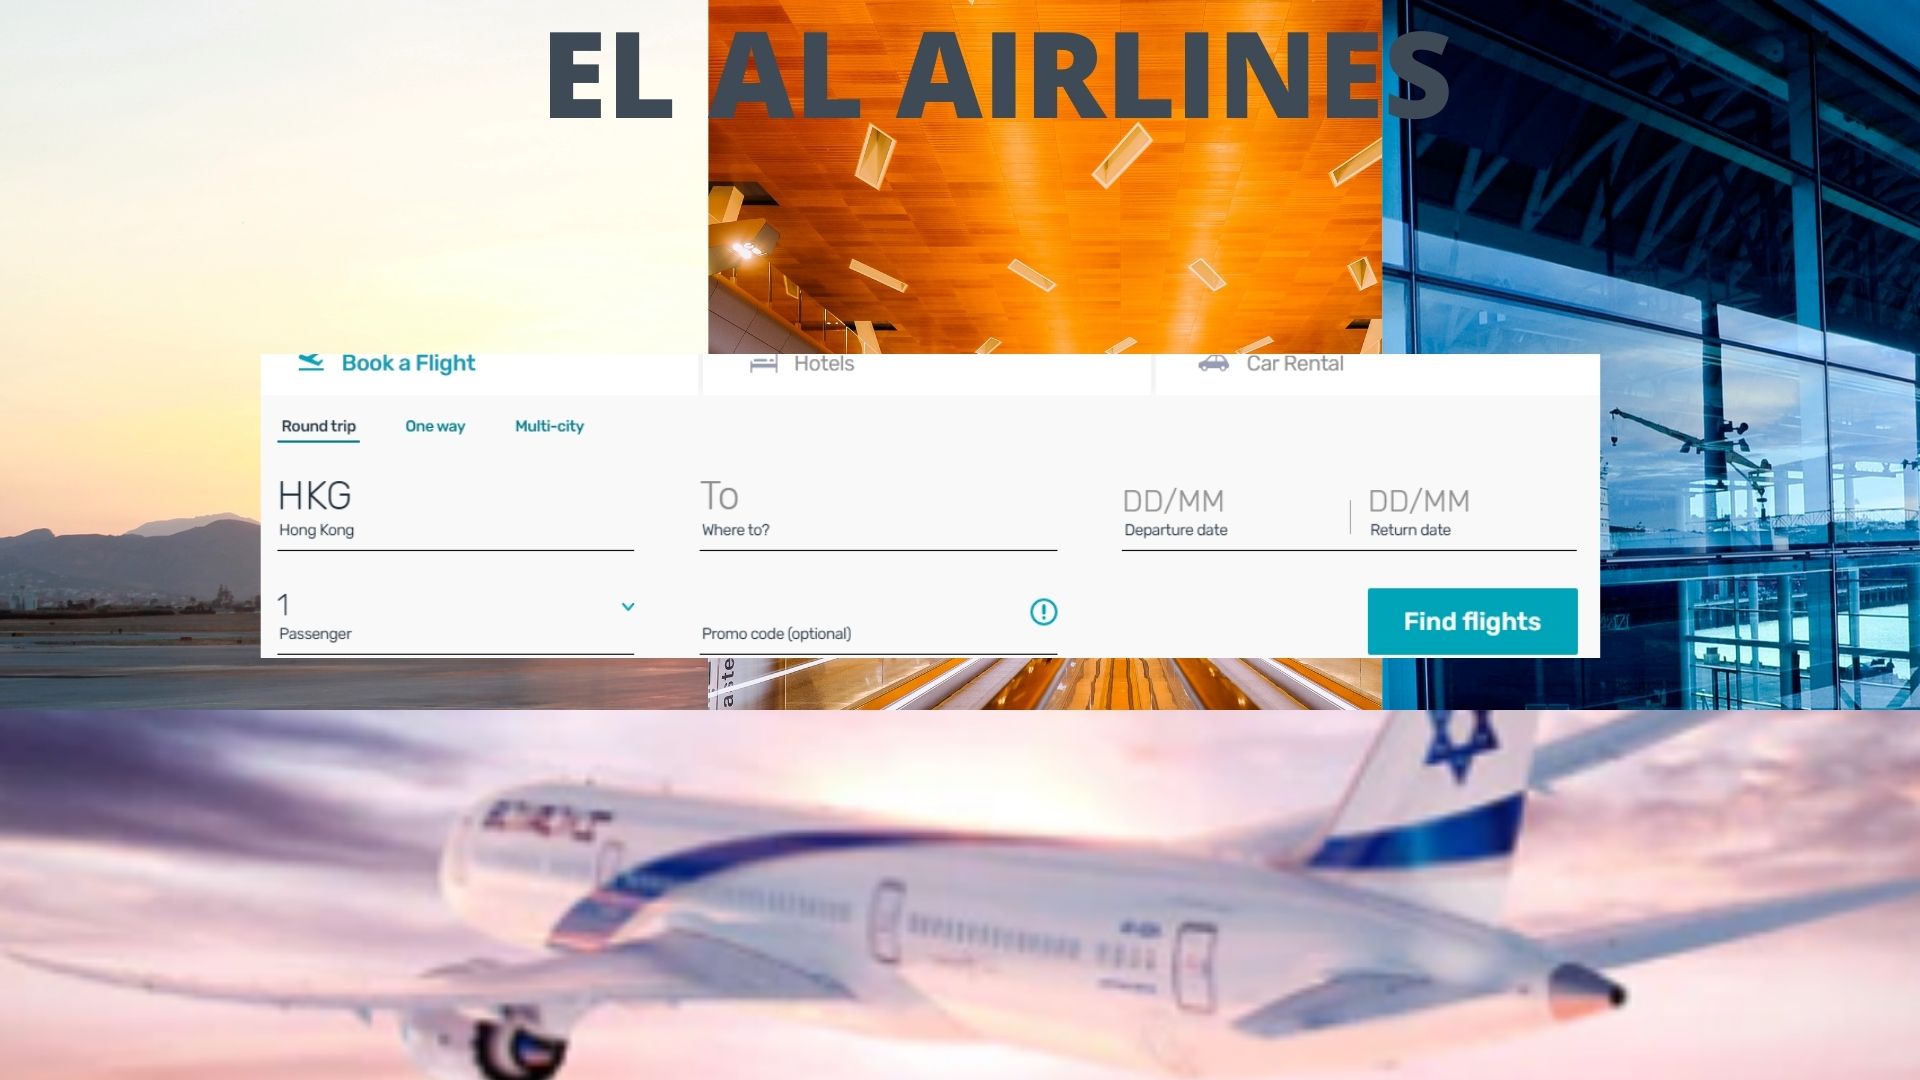 EL AL AIRLINES -